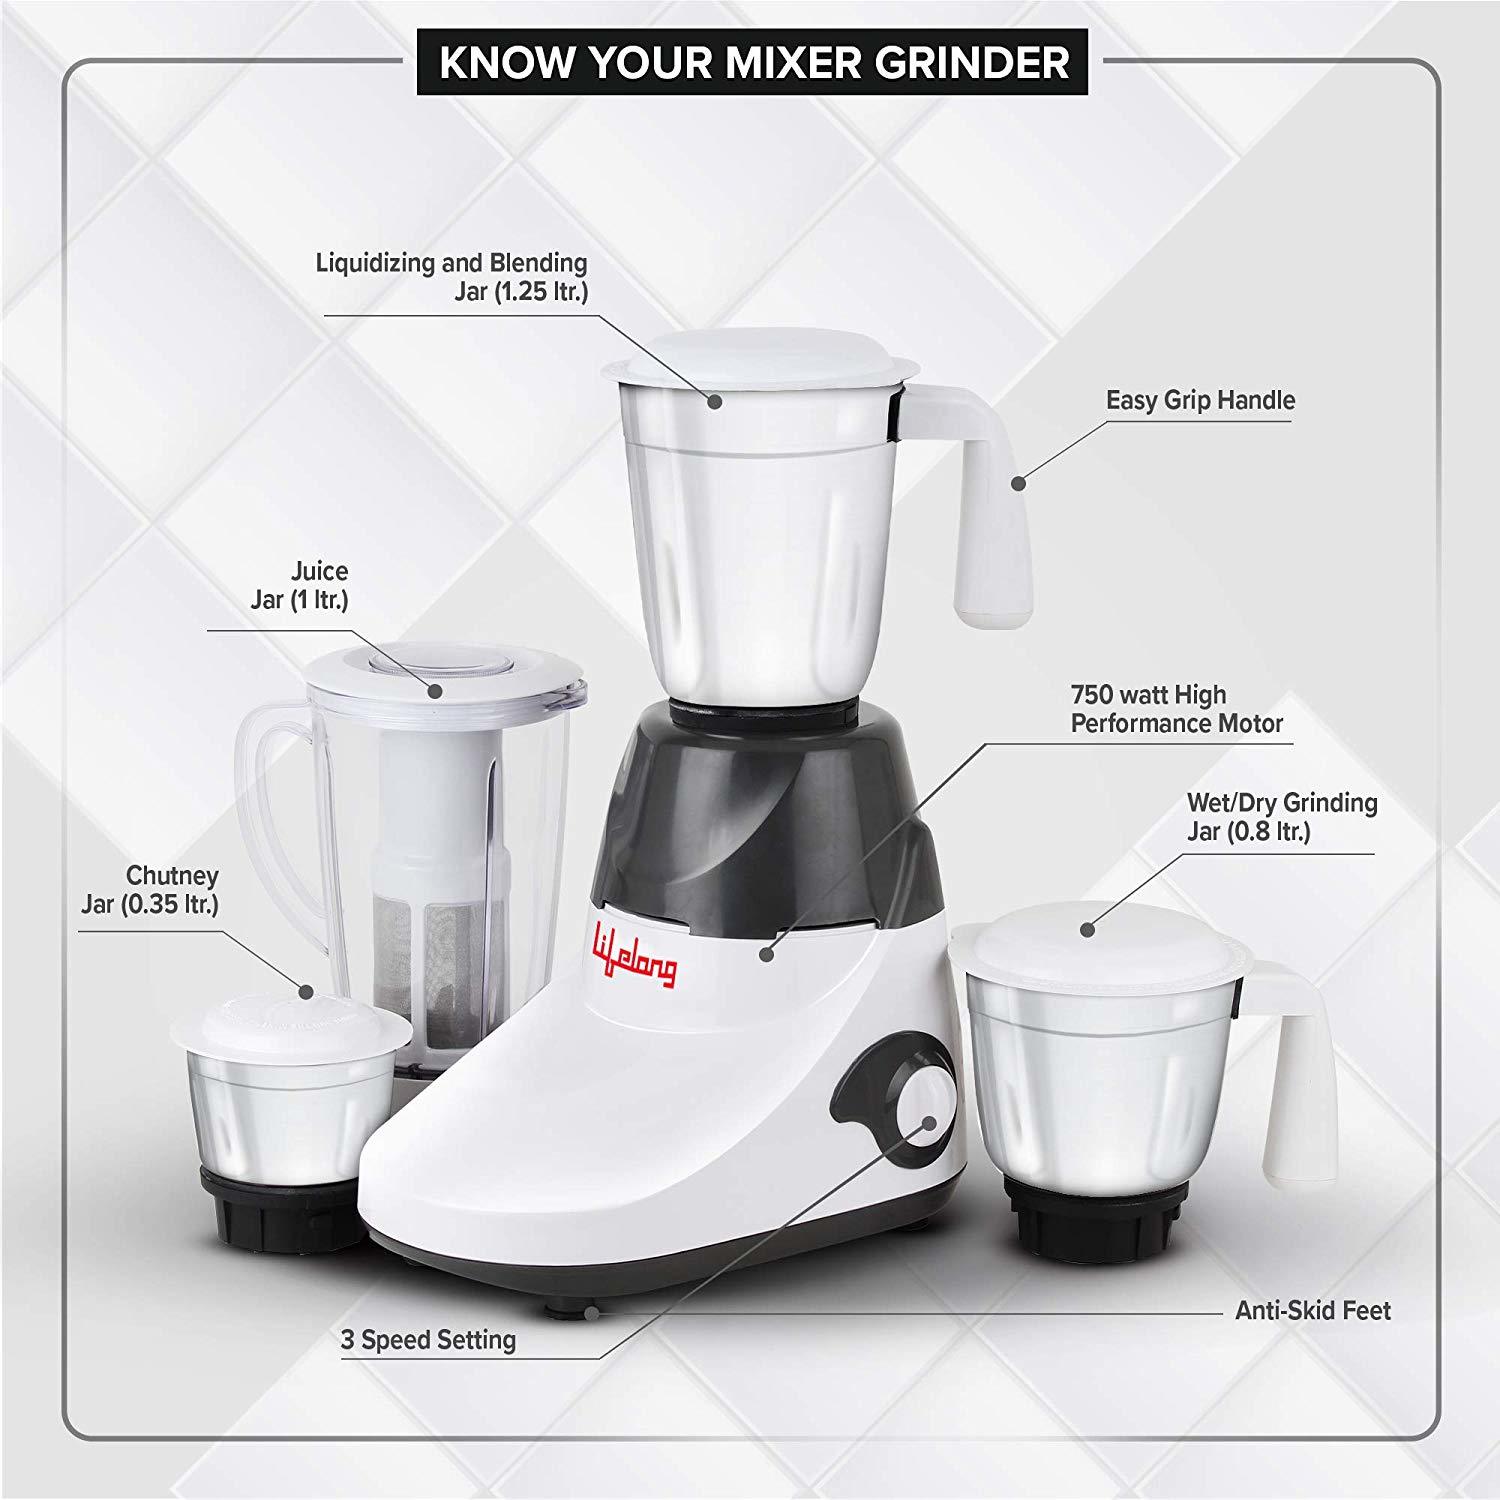 Lifelong 750 Watt Mixer Grinder with 3 Stainless Steel Jar + 1 Juicer Jar, White and Grey